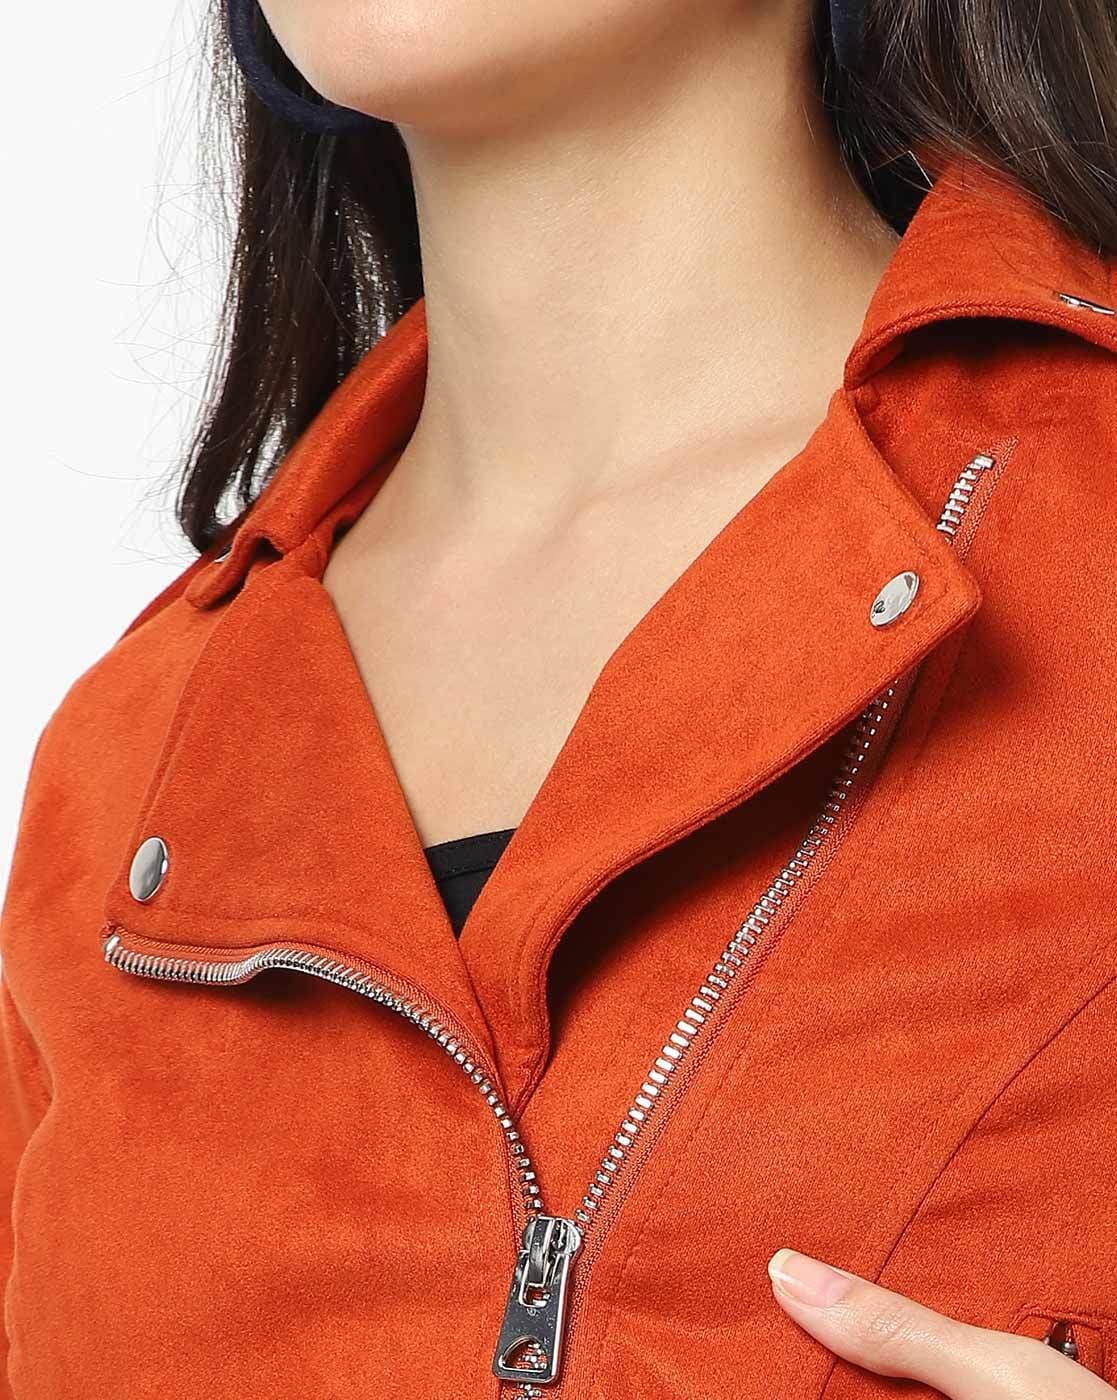 Research Division Wool Varsity Jacket in Burnt Orange – REESE COOPER®